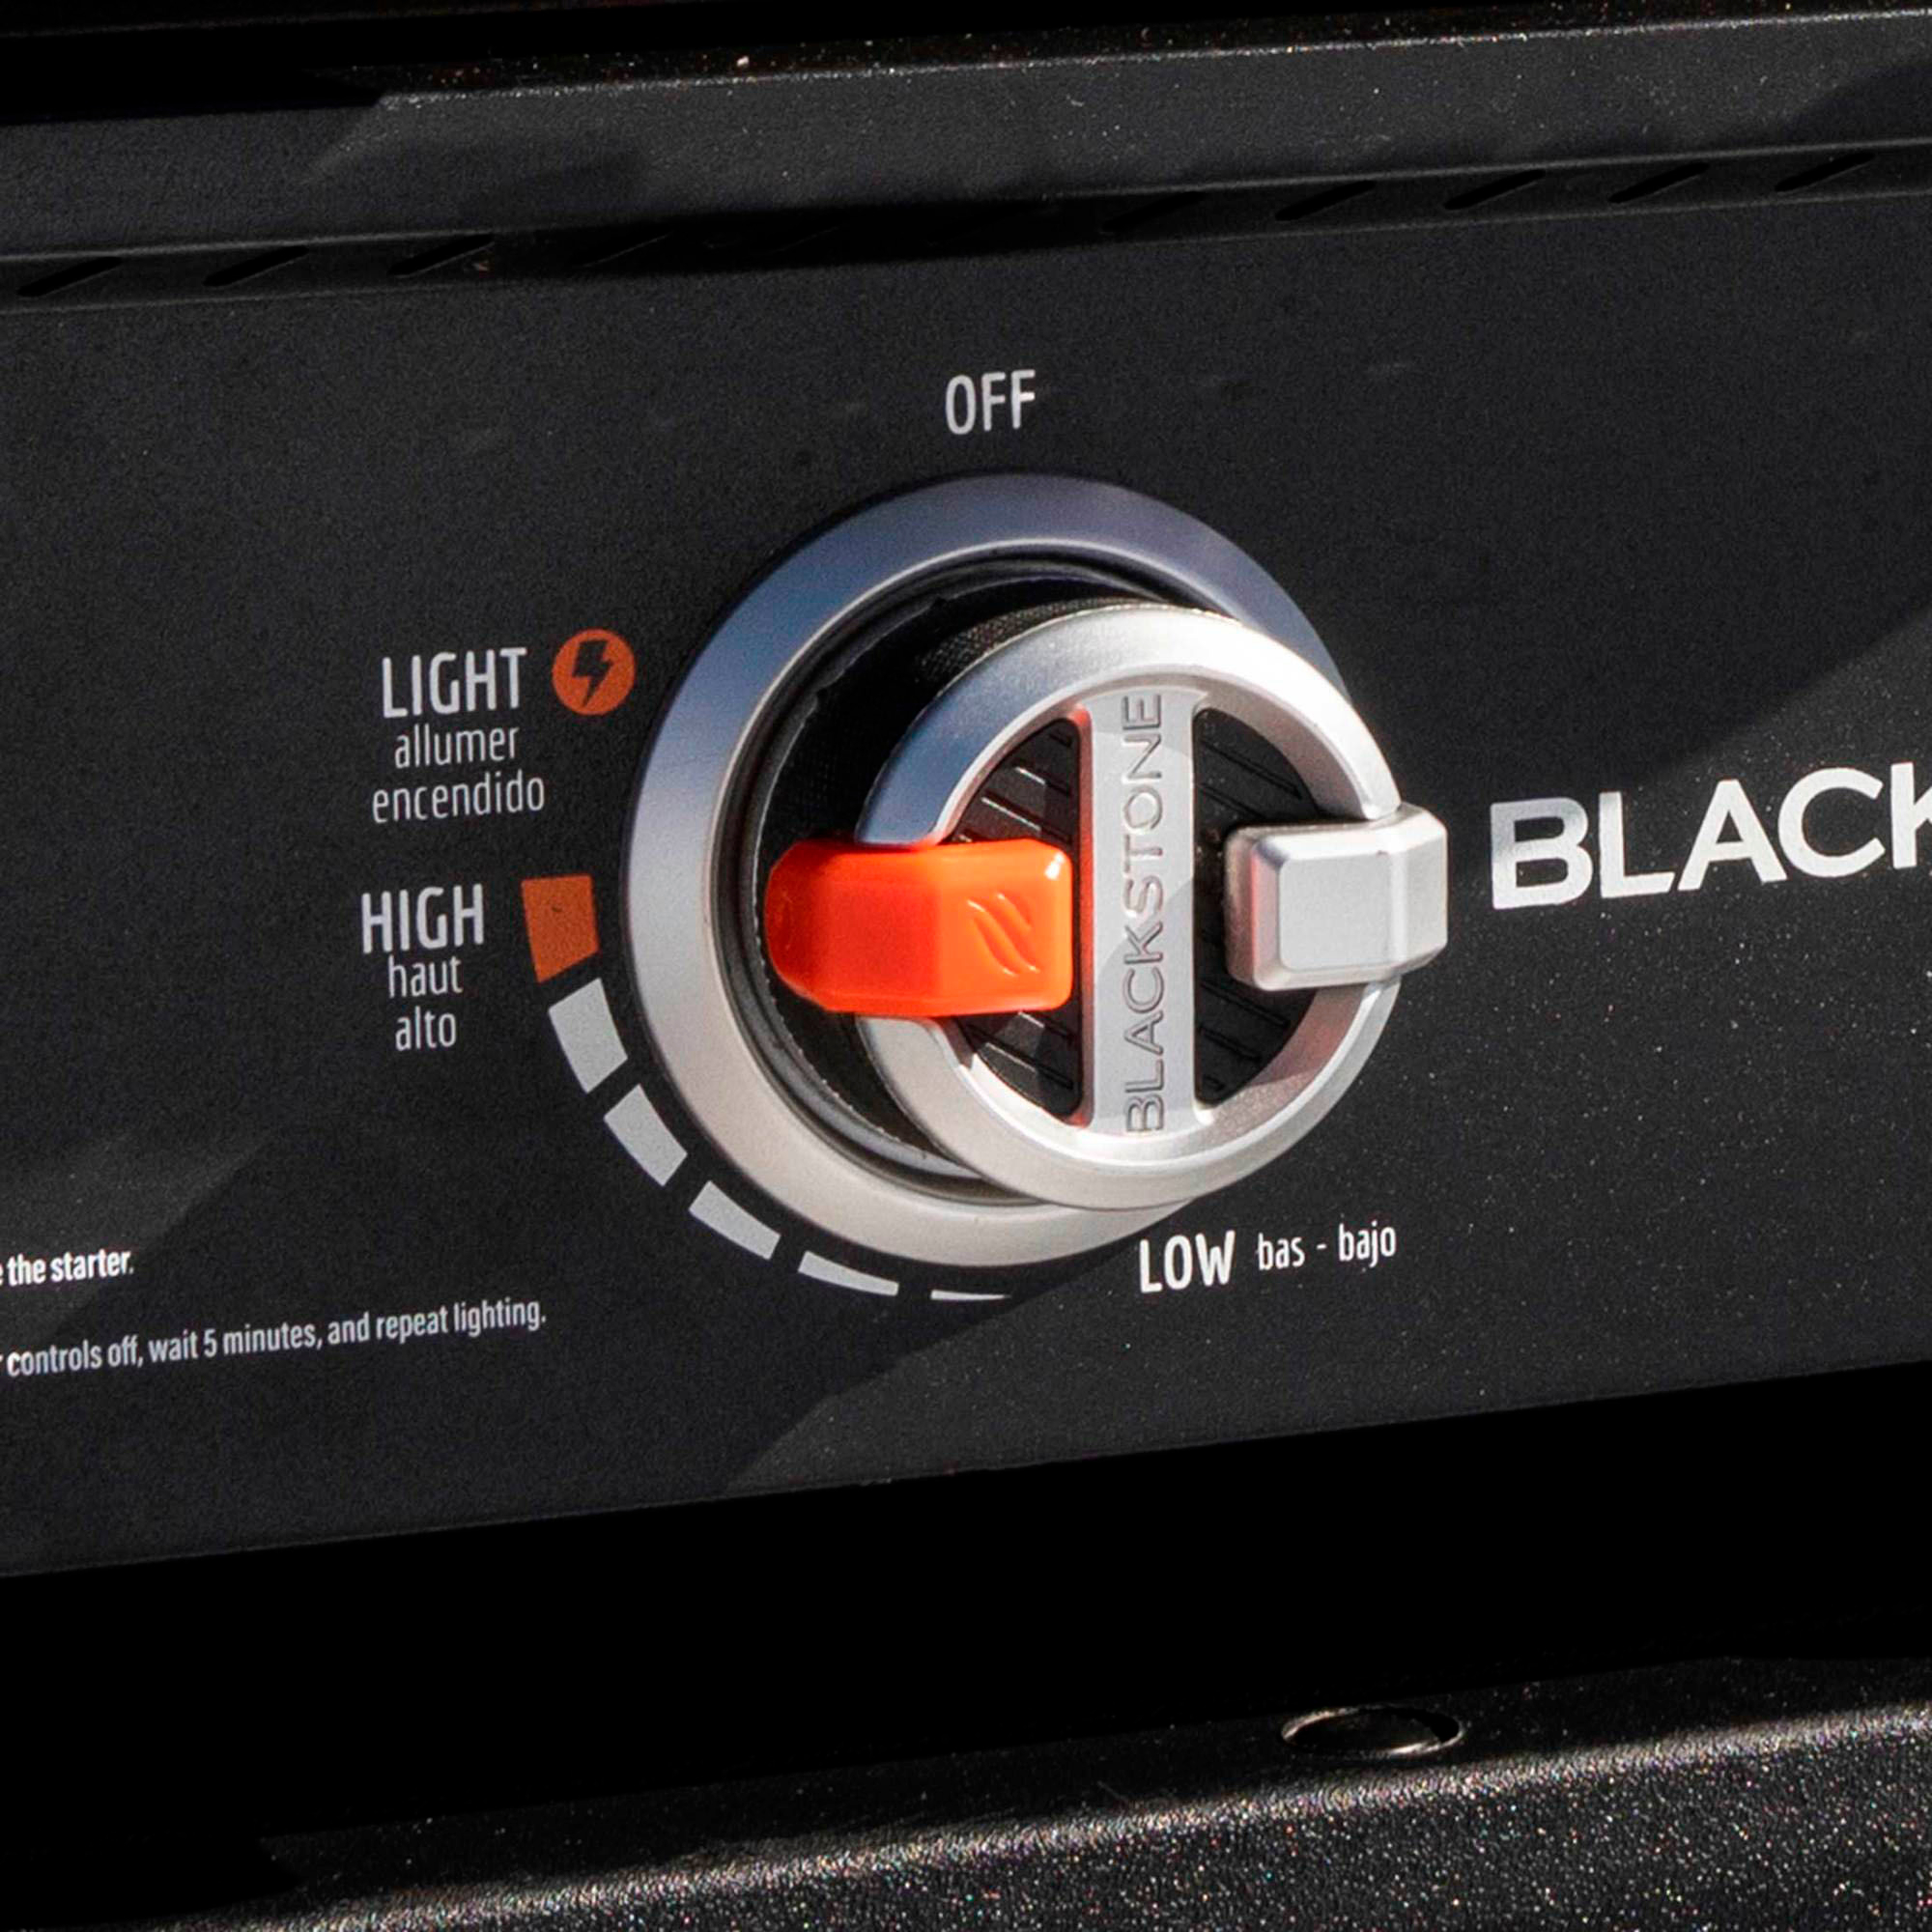 Blackstone 22-in. Countertop Outdoor Griddle Black 2144 - Best Buy